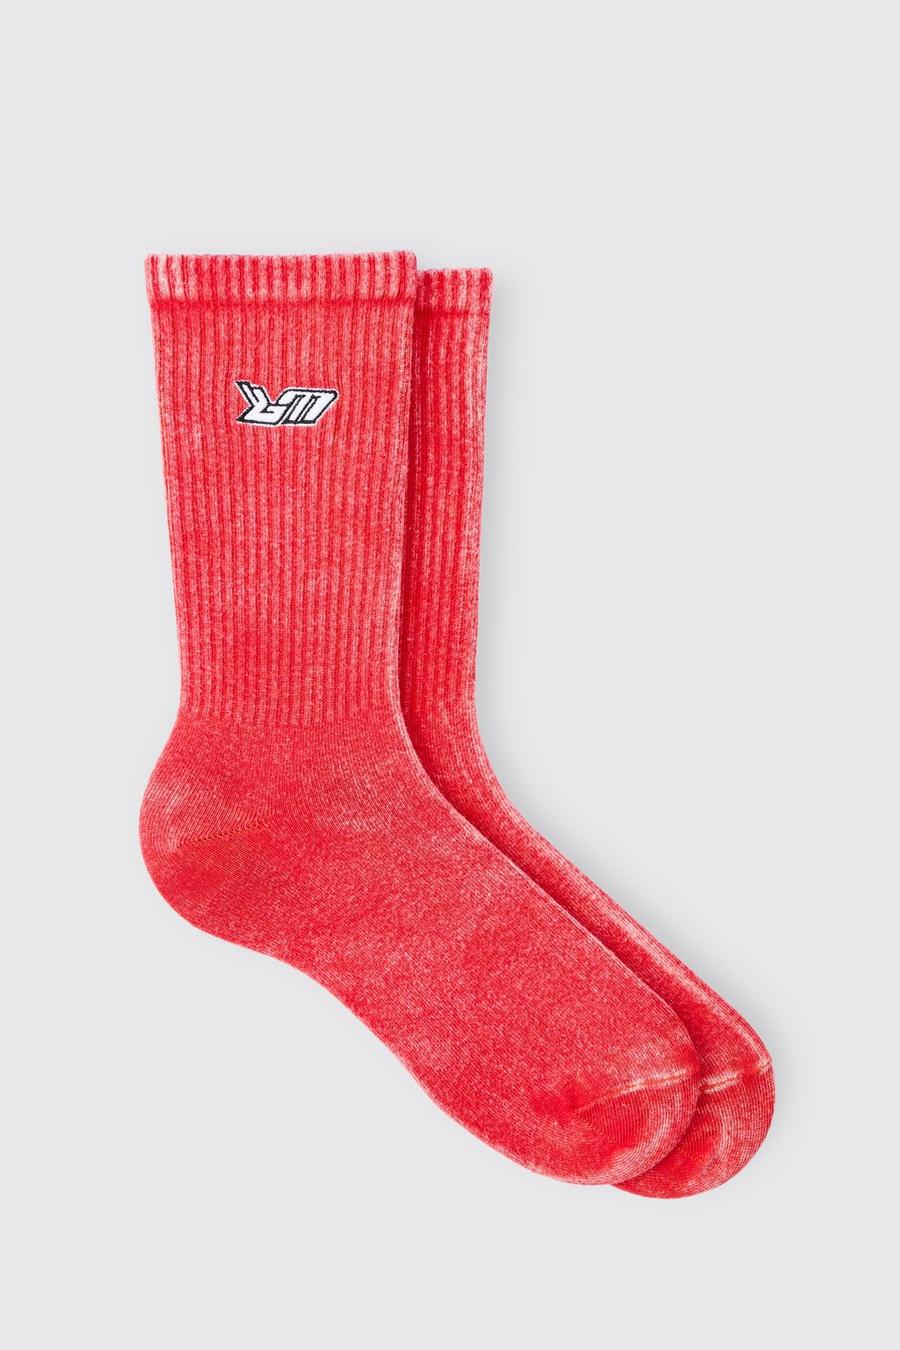 Acid Wash BM Embroidered Socks In Red